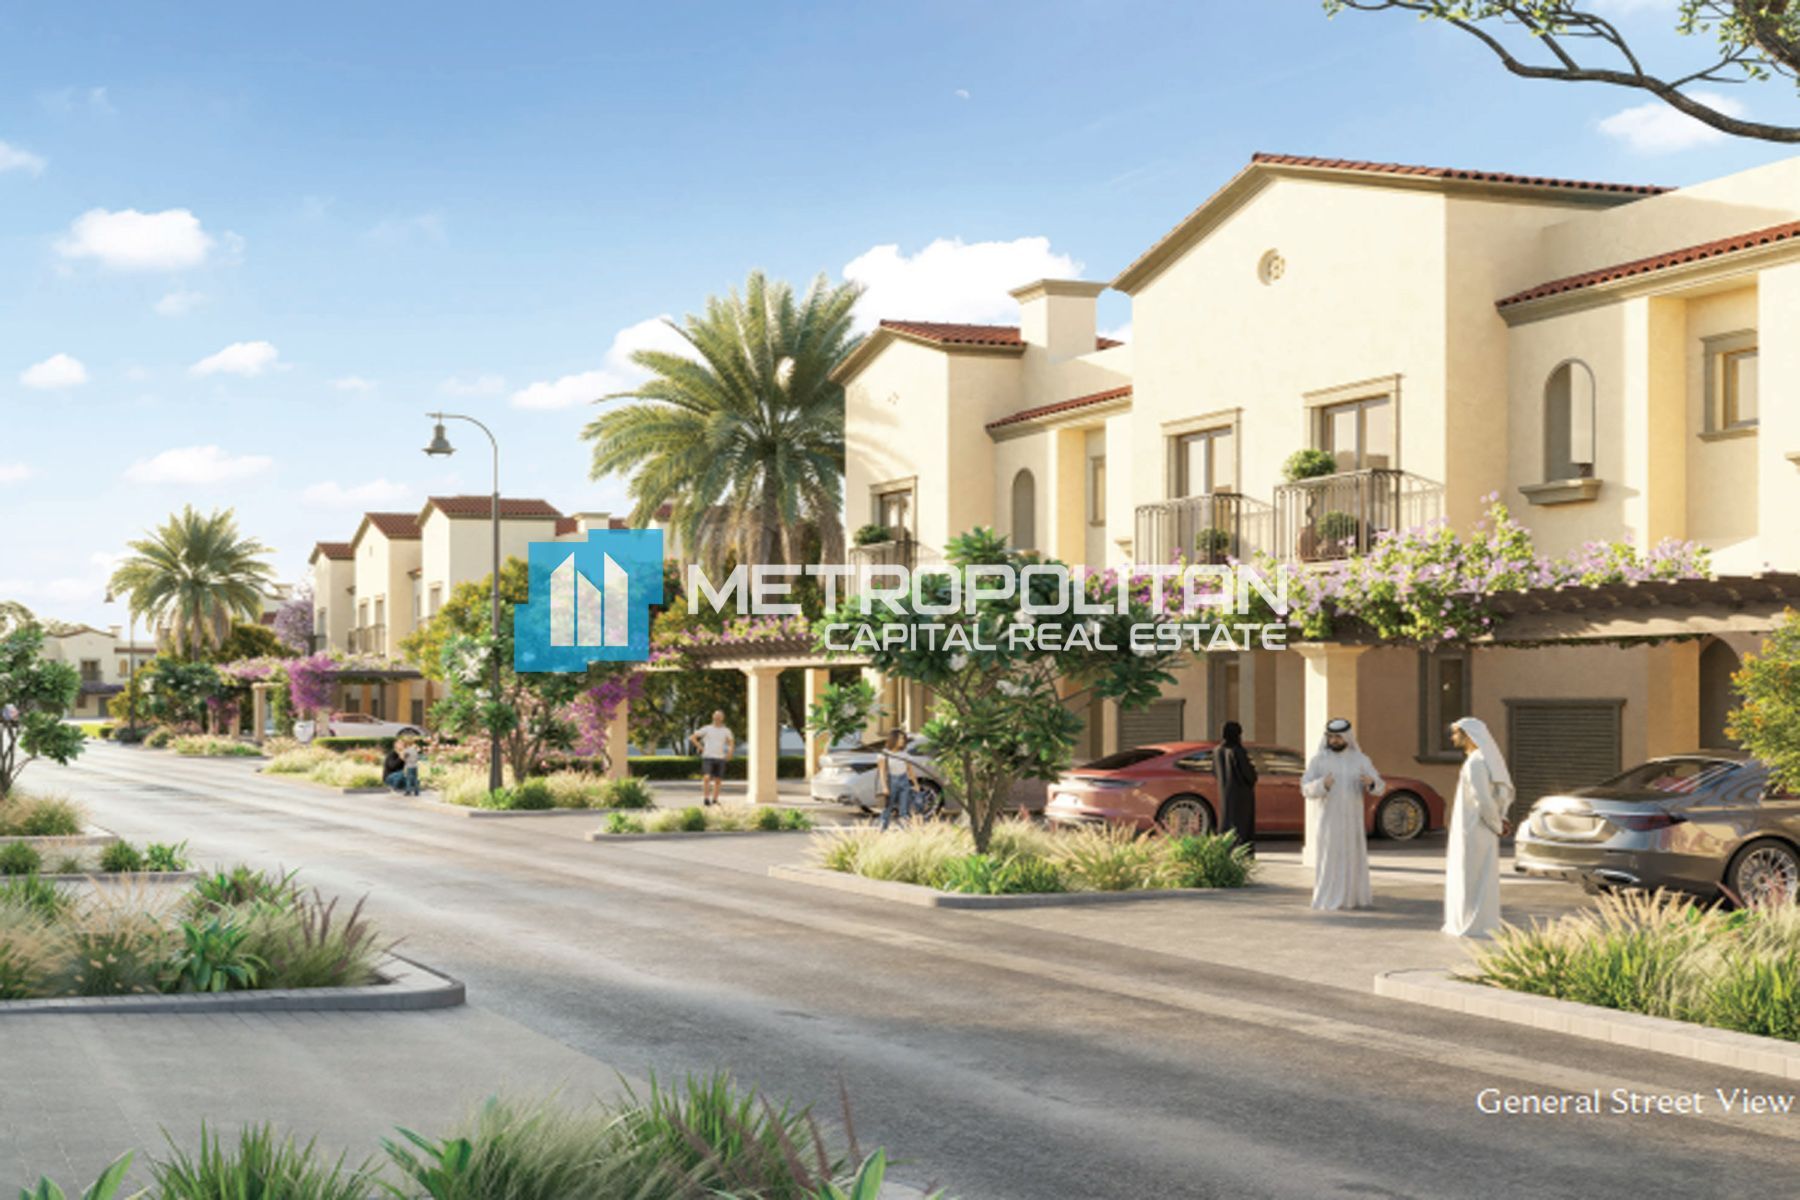 Image - Bloom Living, Khalifa City, Abu Dhabi | Project - Townhouse